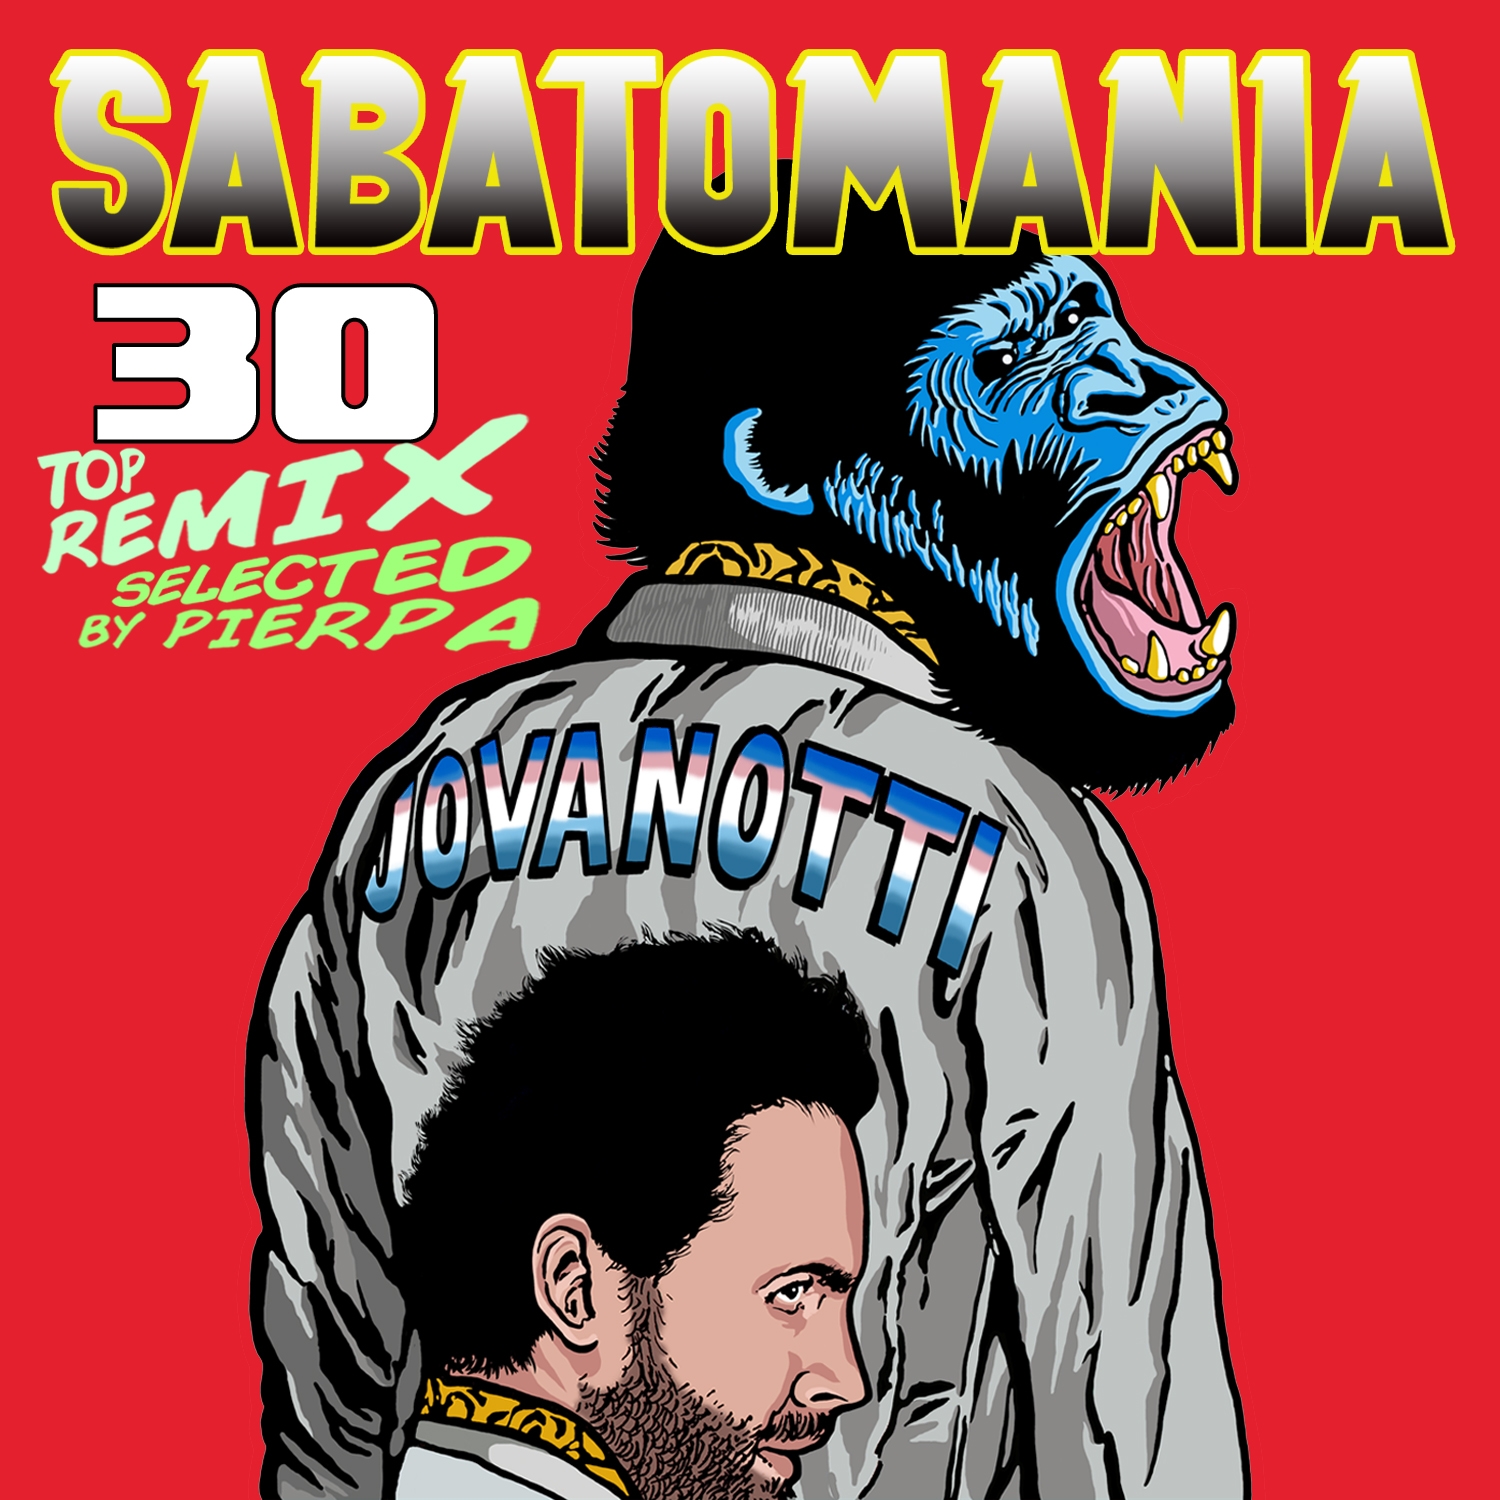 Lorenzo Jovanotti: Sabatomania, 30 remix di Sabato